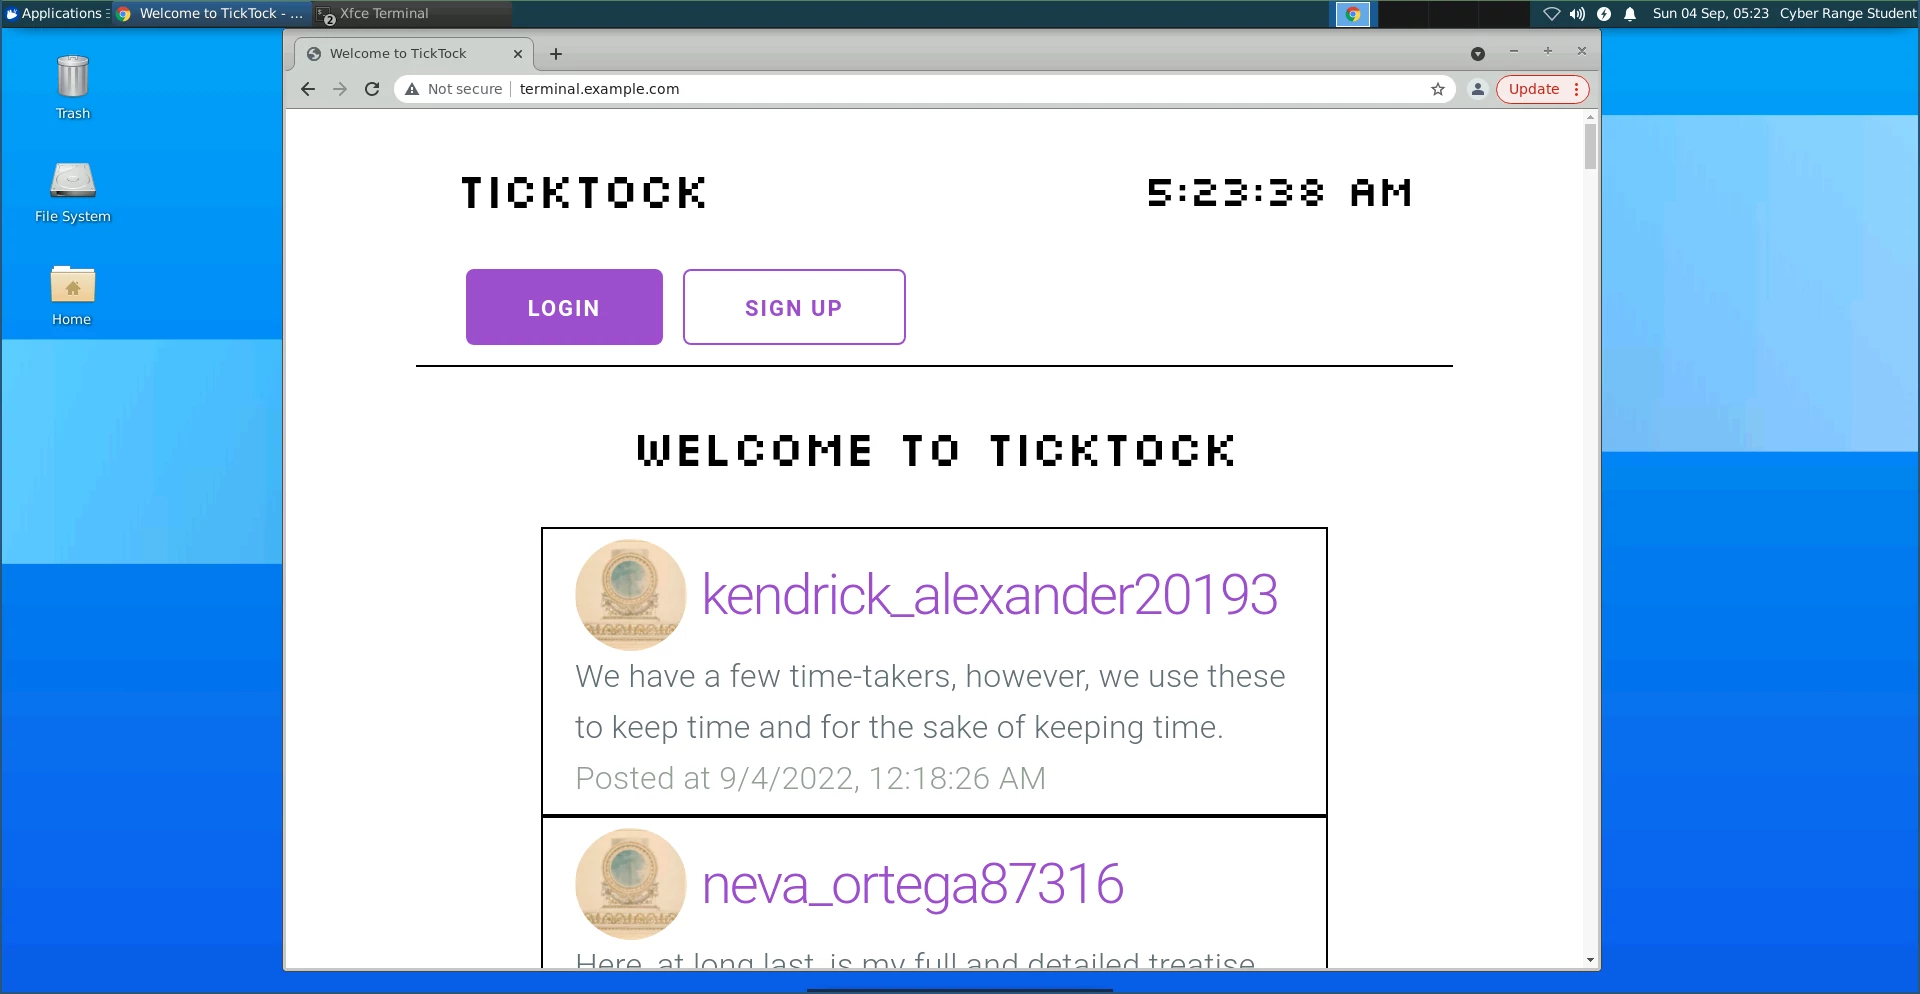 Screenshot of the TickTock website on Virginia Cyber Range.